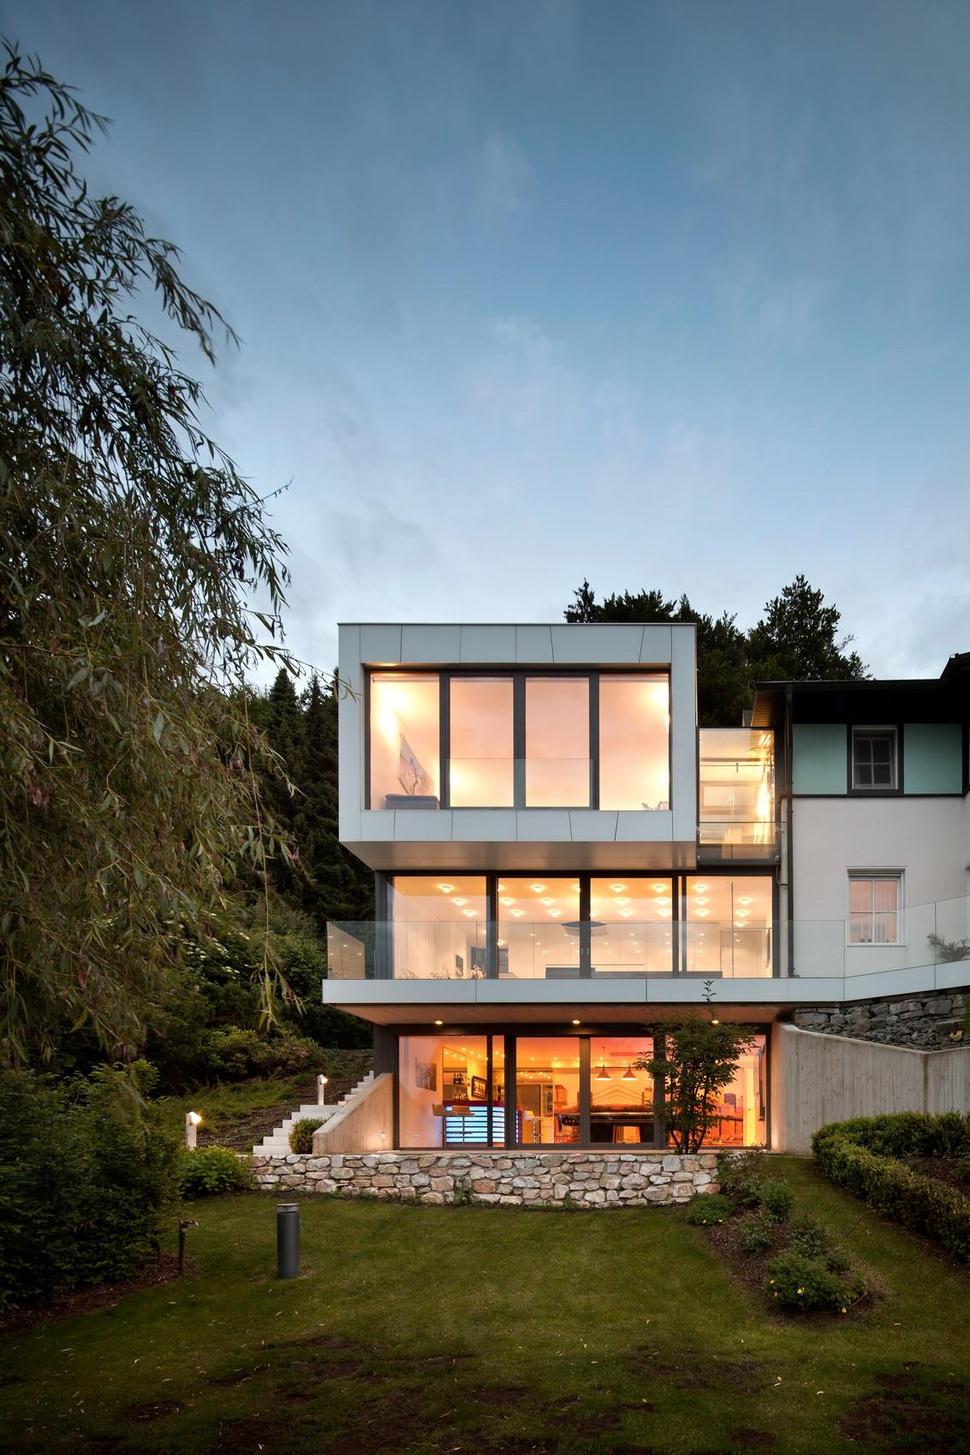 3-storey-home-addition-takes-advantage-dockside-views-8-back-facade.jpg